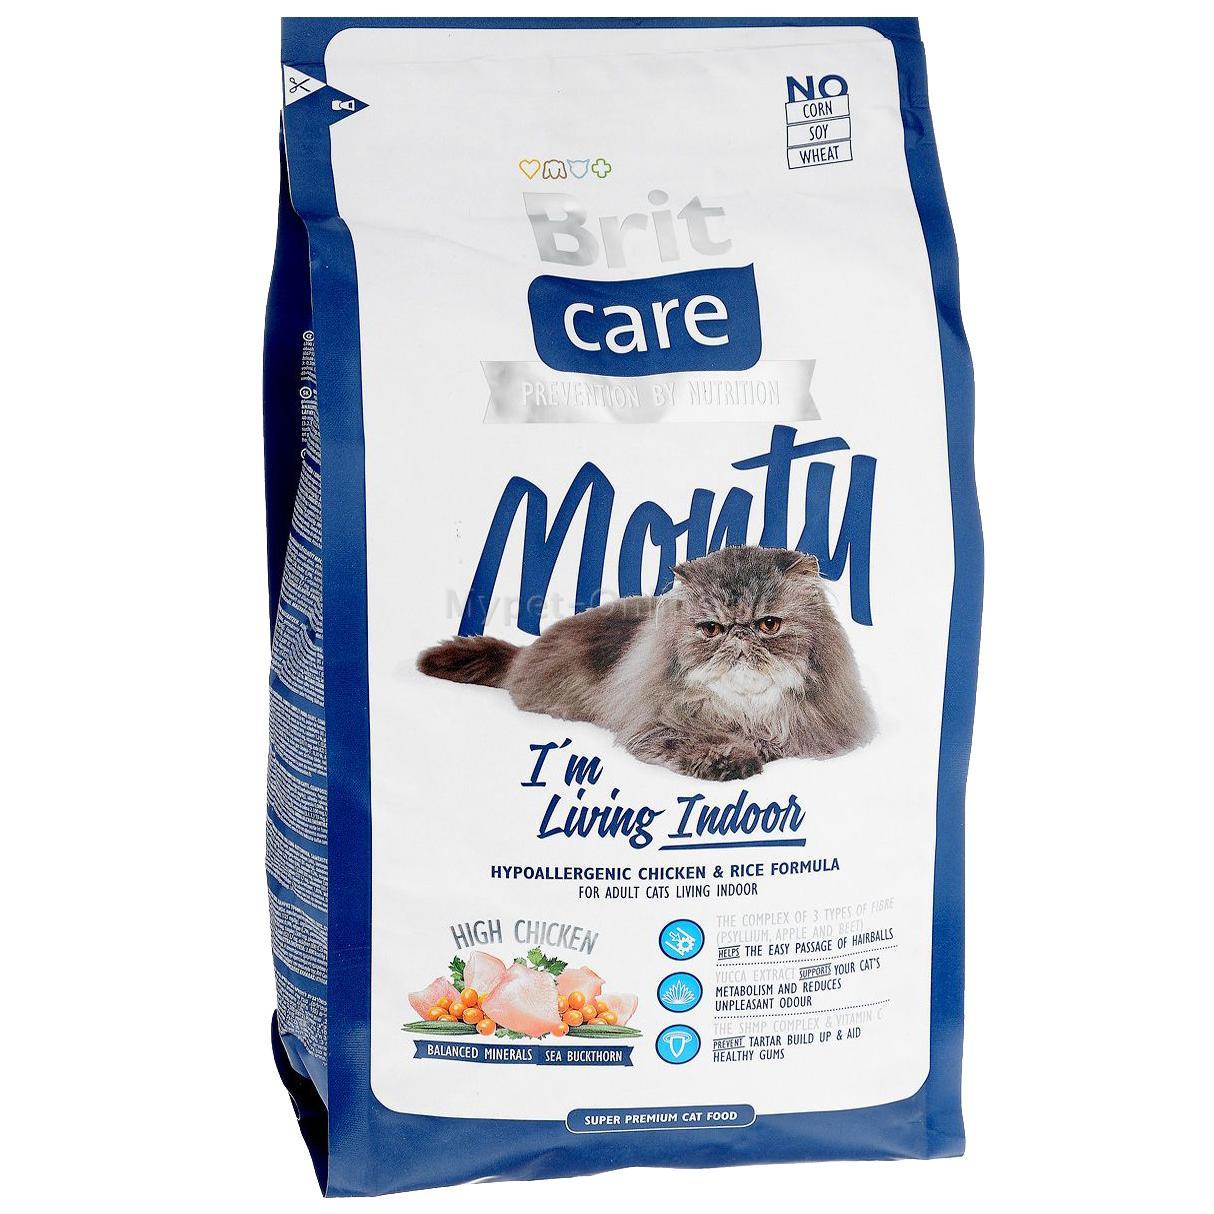 Брит кар корм для кошек. Сухой корм для кошек Brit Care. Brit Care Monty Indoor (2 кг). Brit Care Cat Monty Indoor. Брит Кэа корм для кошек.